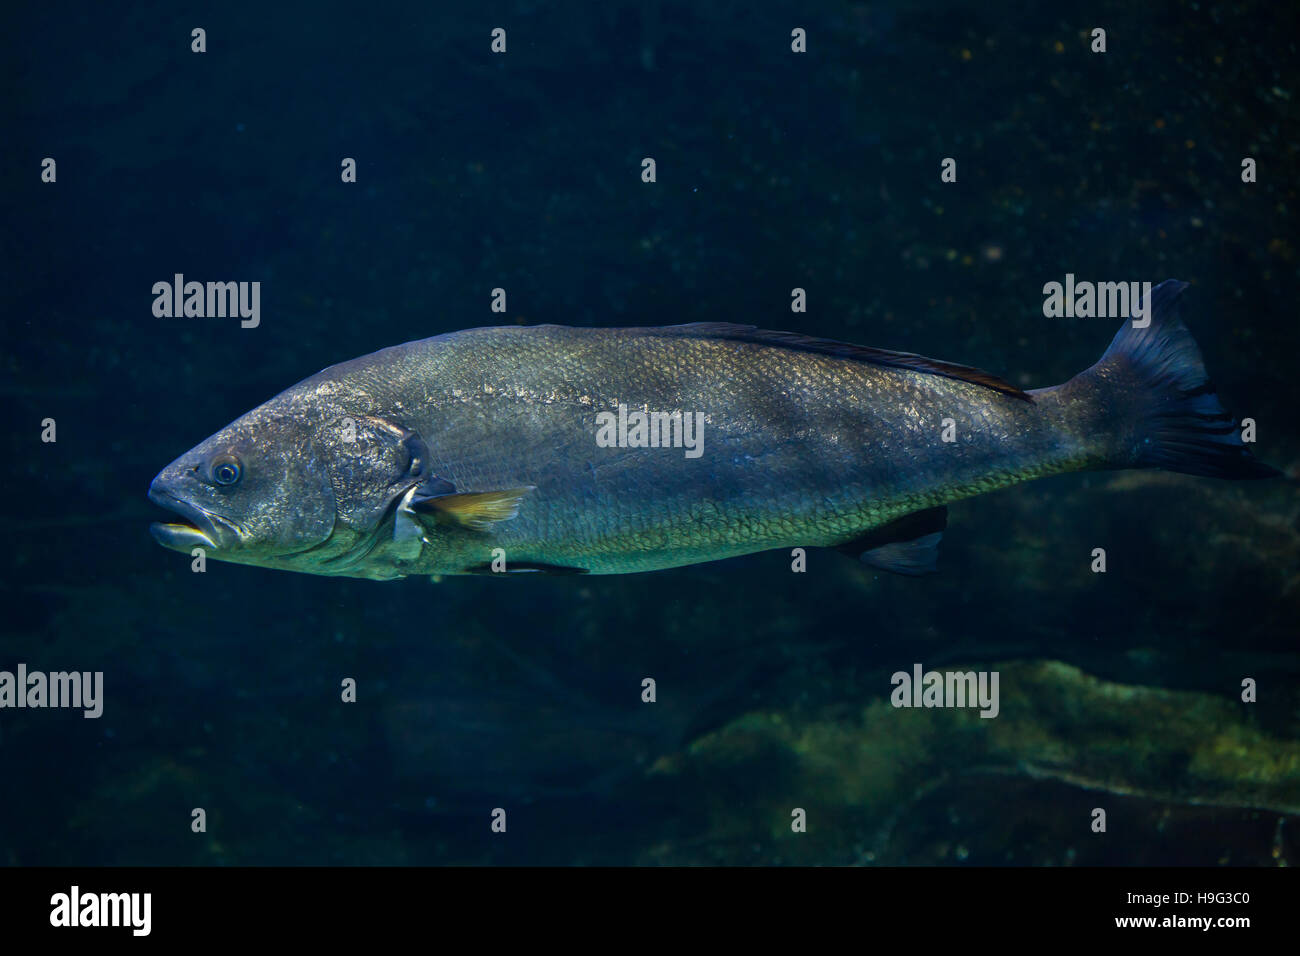 Meagre (Argyrosomus regius), also known the Atlantic shadefish. Stock Photo